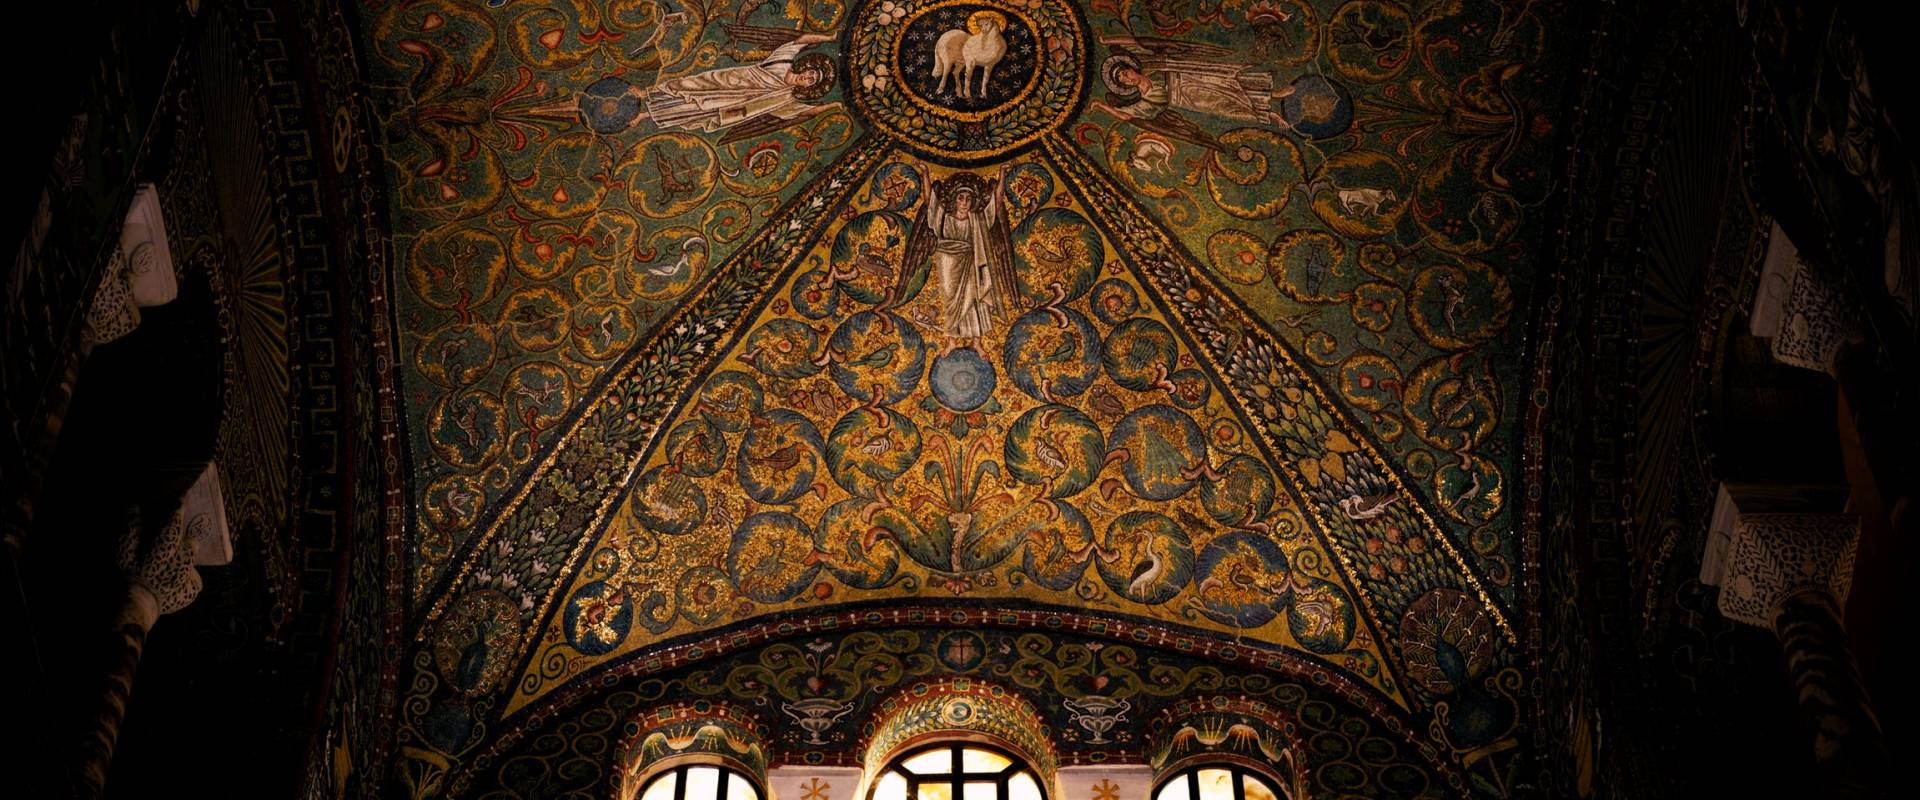 Basilica di San Vitale, I mosaici del presbiterio photo by _o0OKO0o_